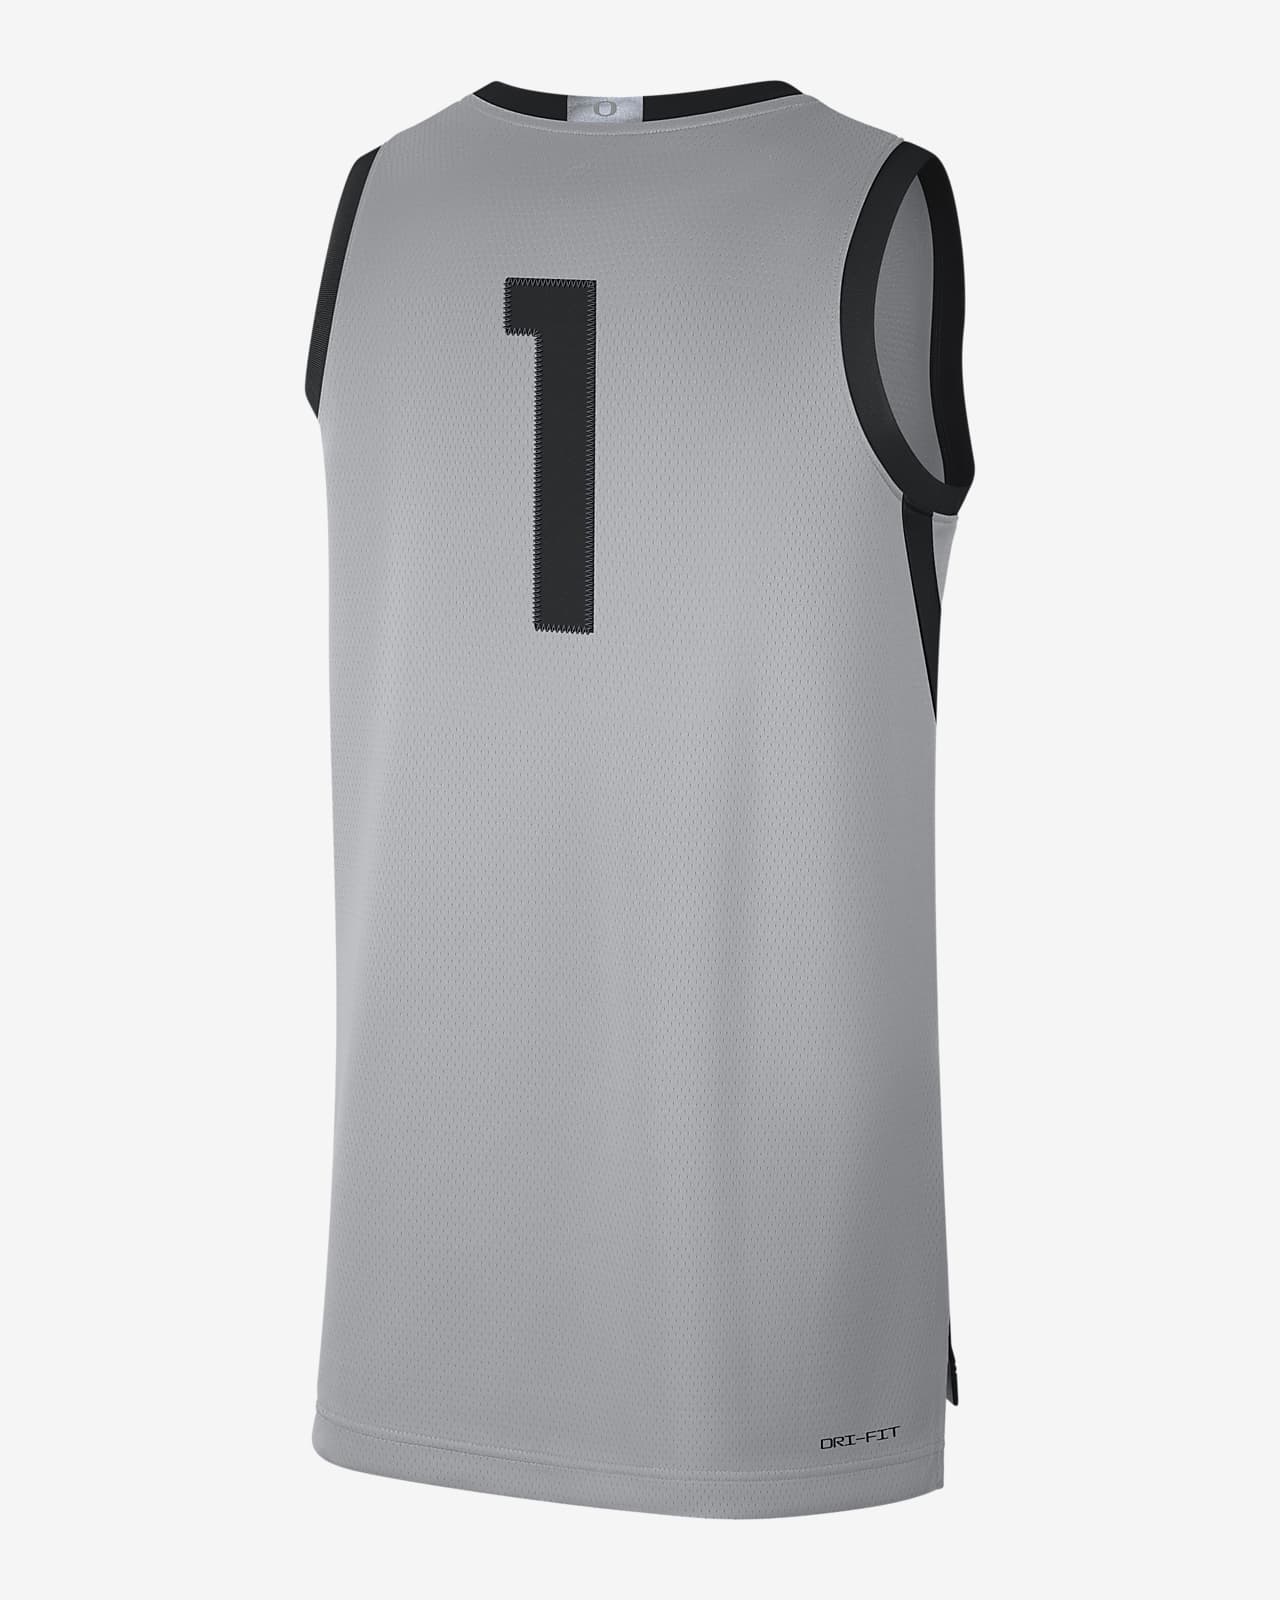 Nike College Dri-FIT (Oregon) Men's Limited Jersey